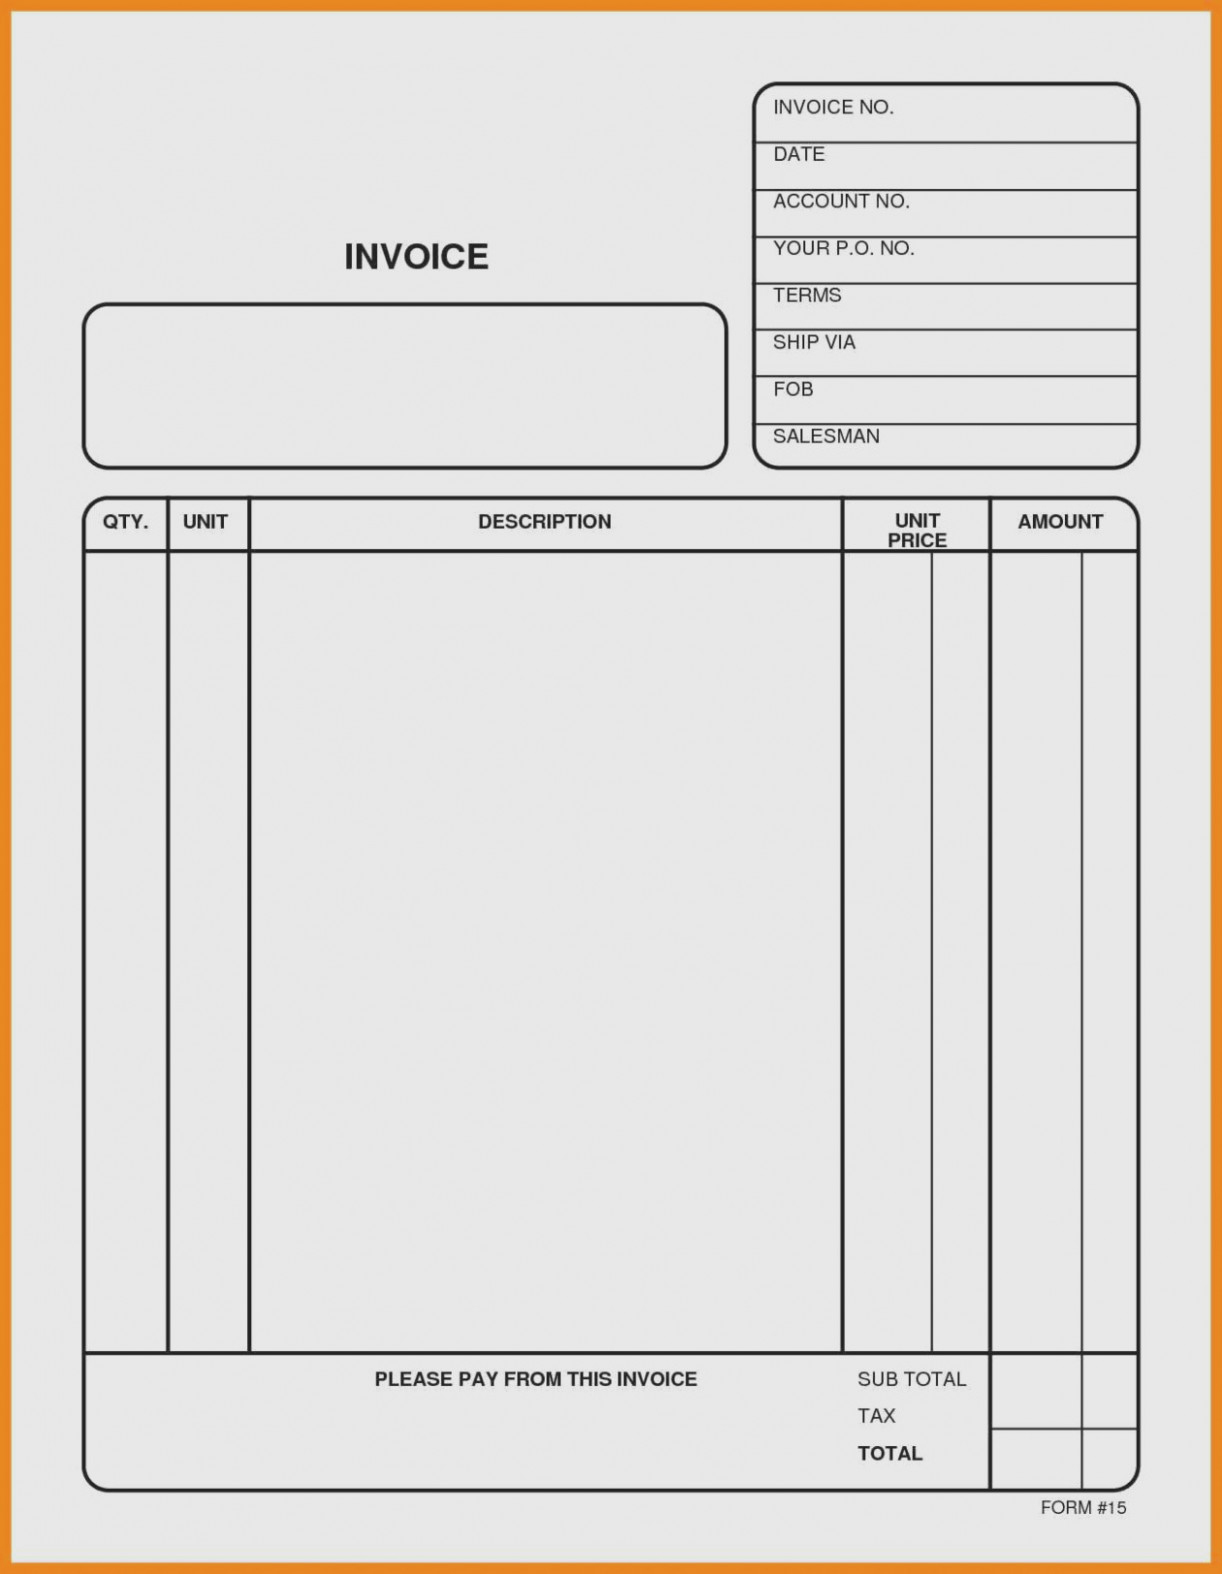 Print Out Invoices For Free - Rehau.hauteboxx.co - Free Printable Invoices